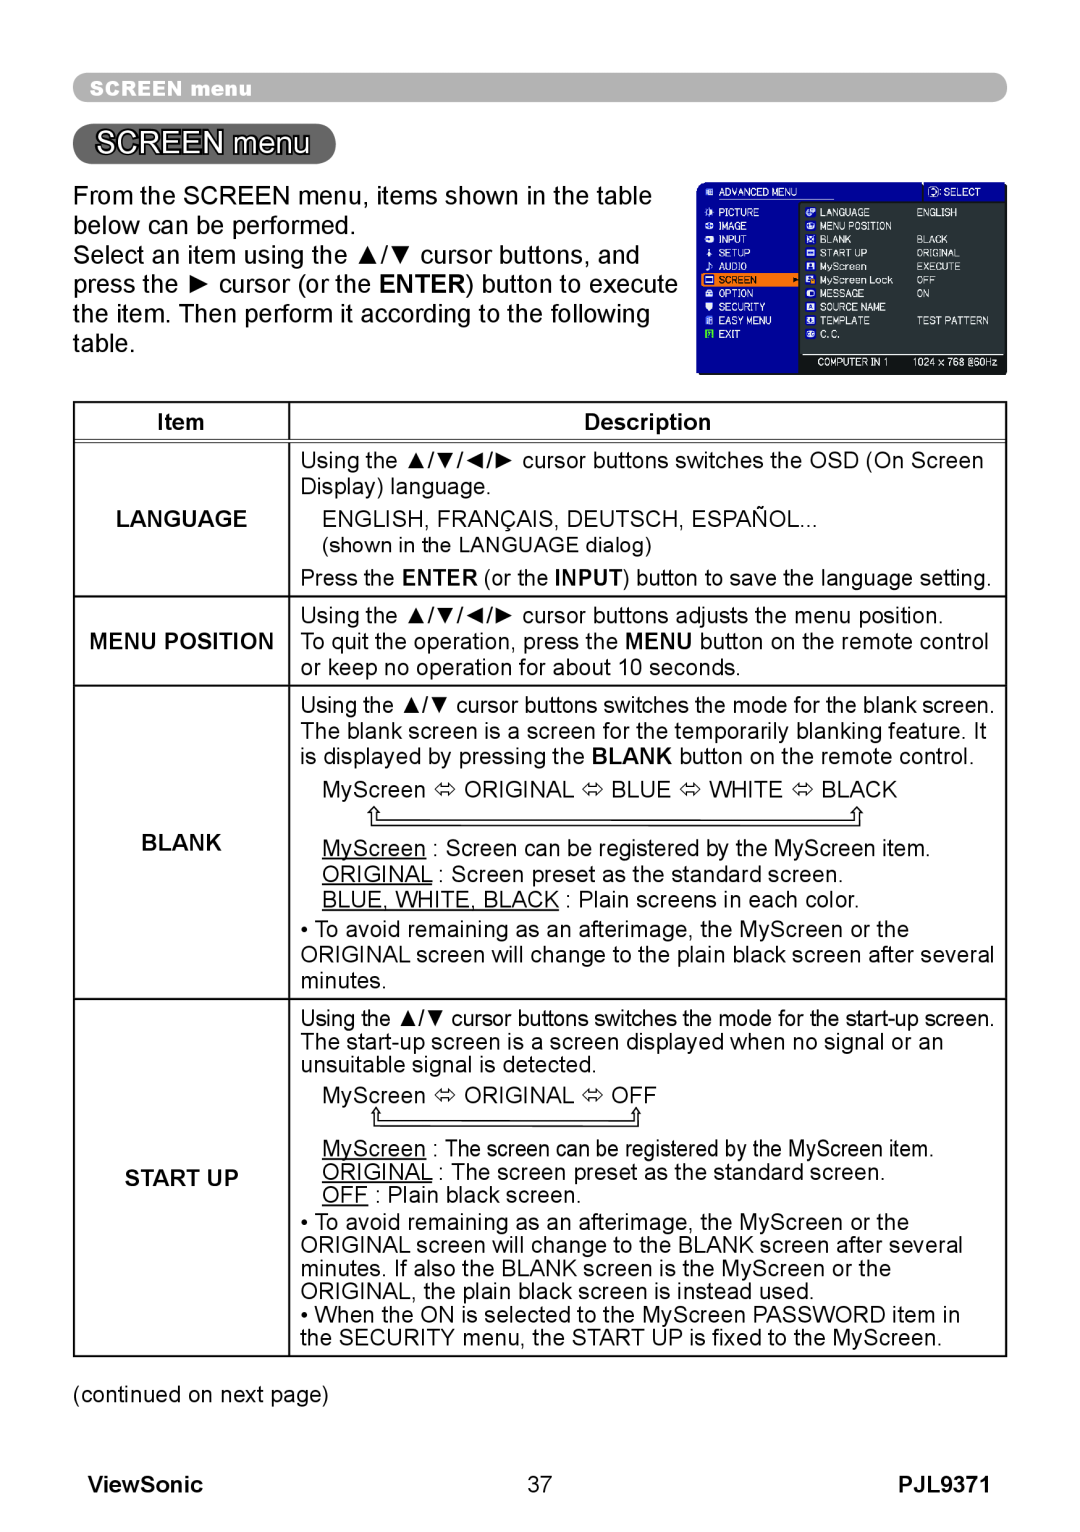 ViewSonic pjl9371 manual SCREEN menu, Description, Language, Blank, Start Up, ViewSonic 